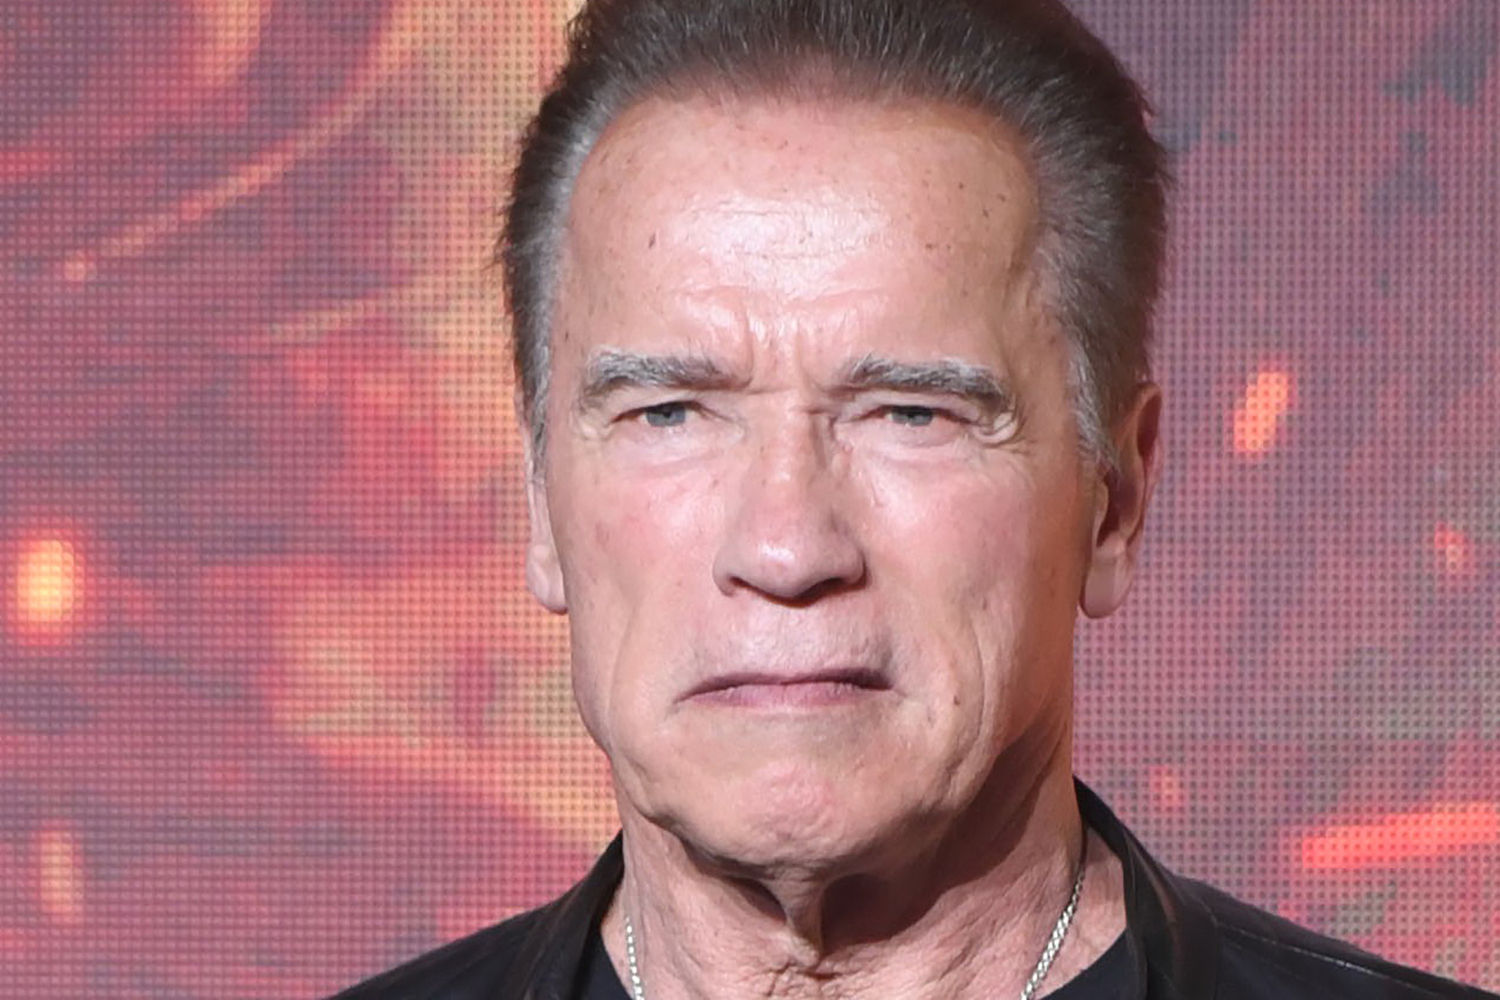 Closeup of Arnold Schwarzenegger's face looking disgruntled